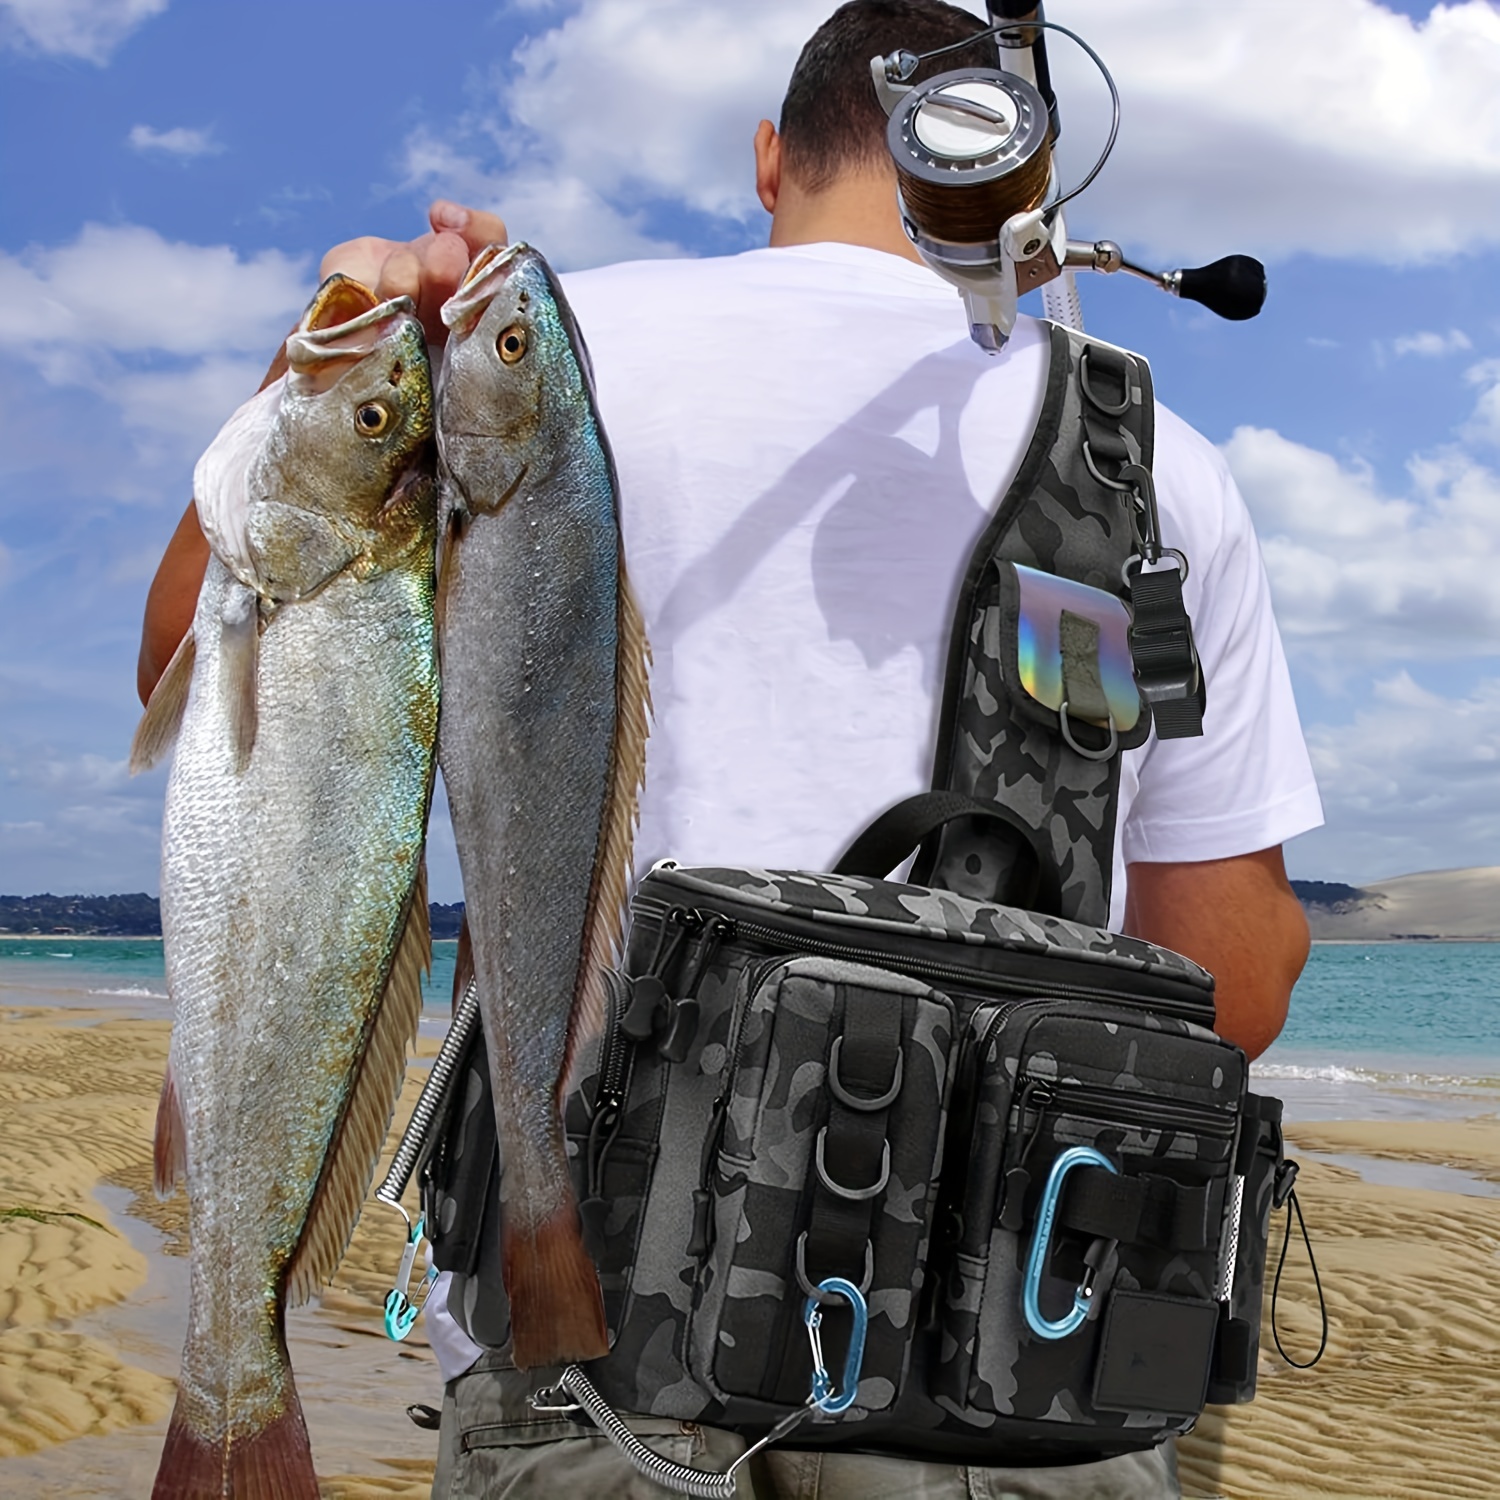 Fishing Tackle Bag Shoulder Crossbody Fly Fish Gear Waist Bag with Rod  Holder